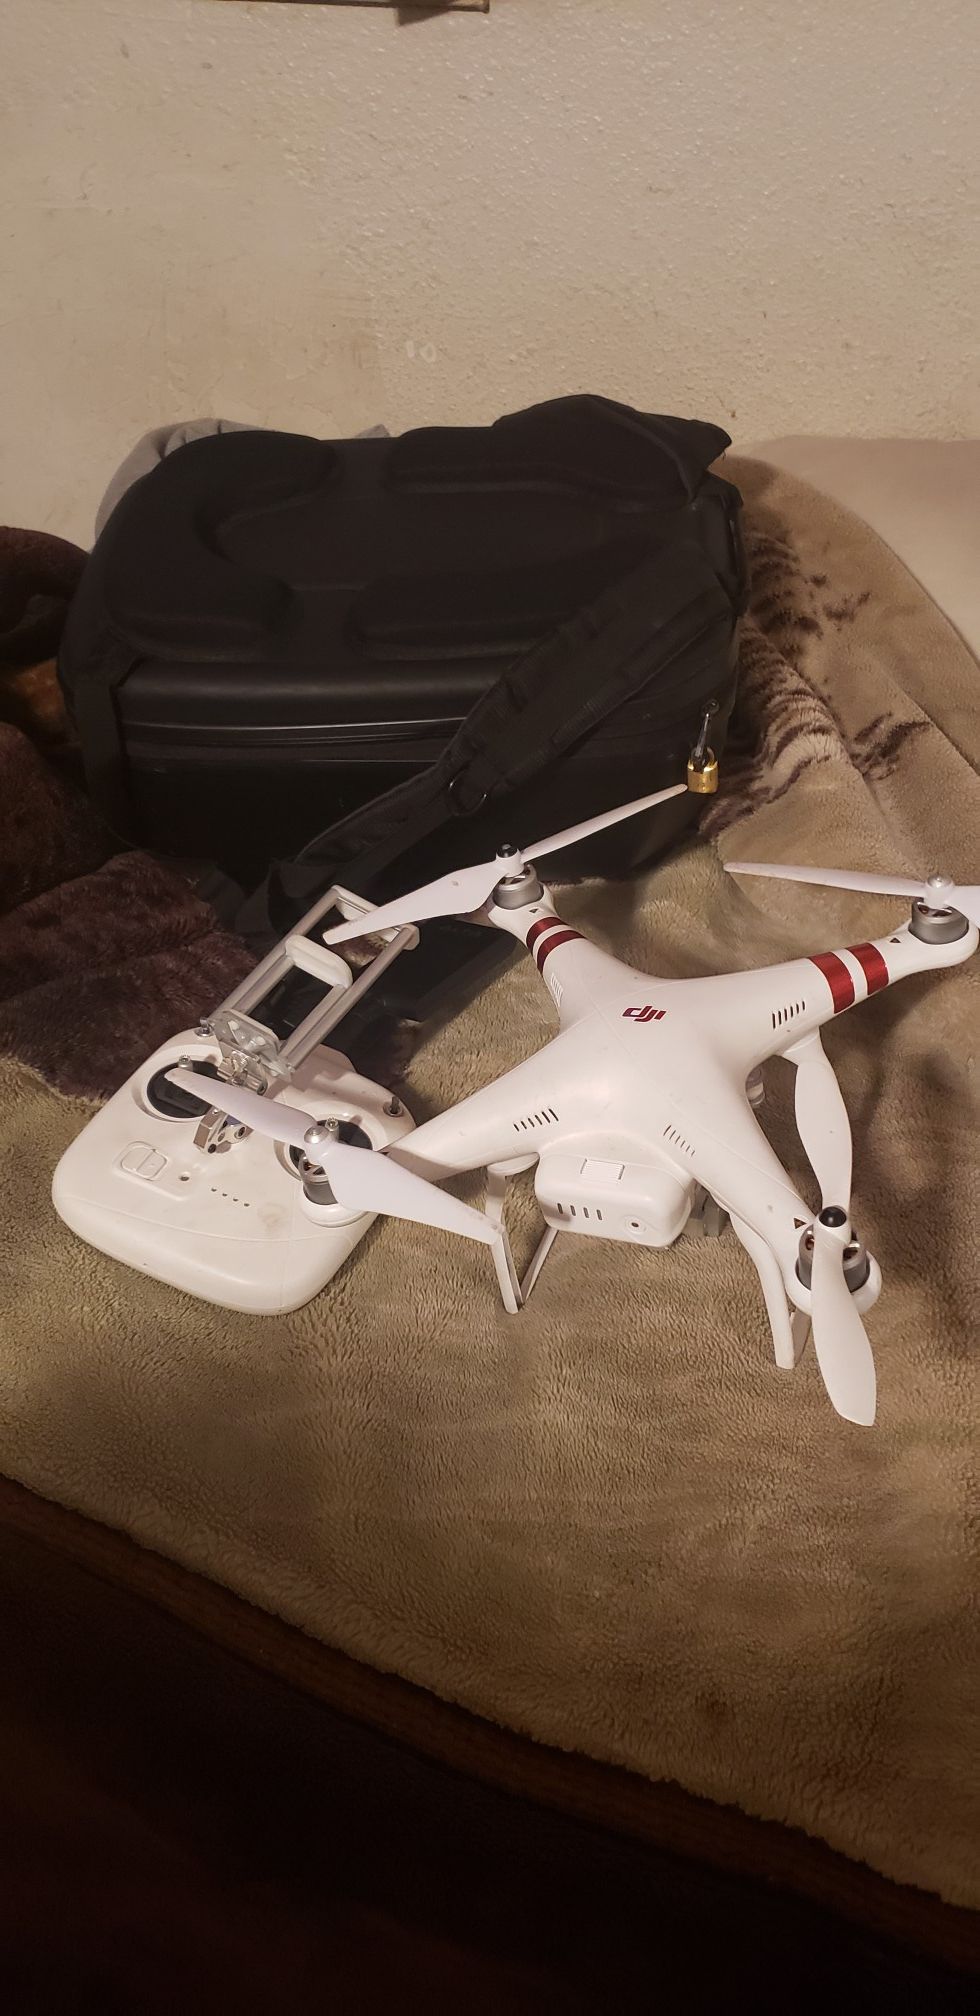 Dji phantom drone with Camera